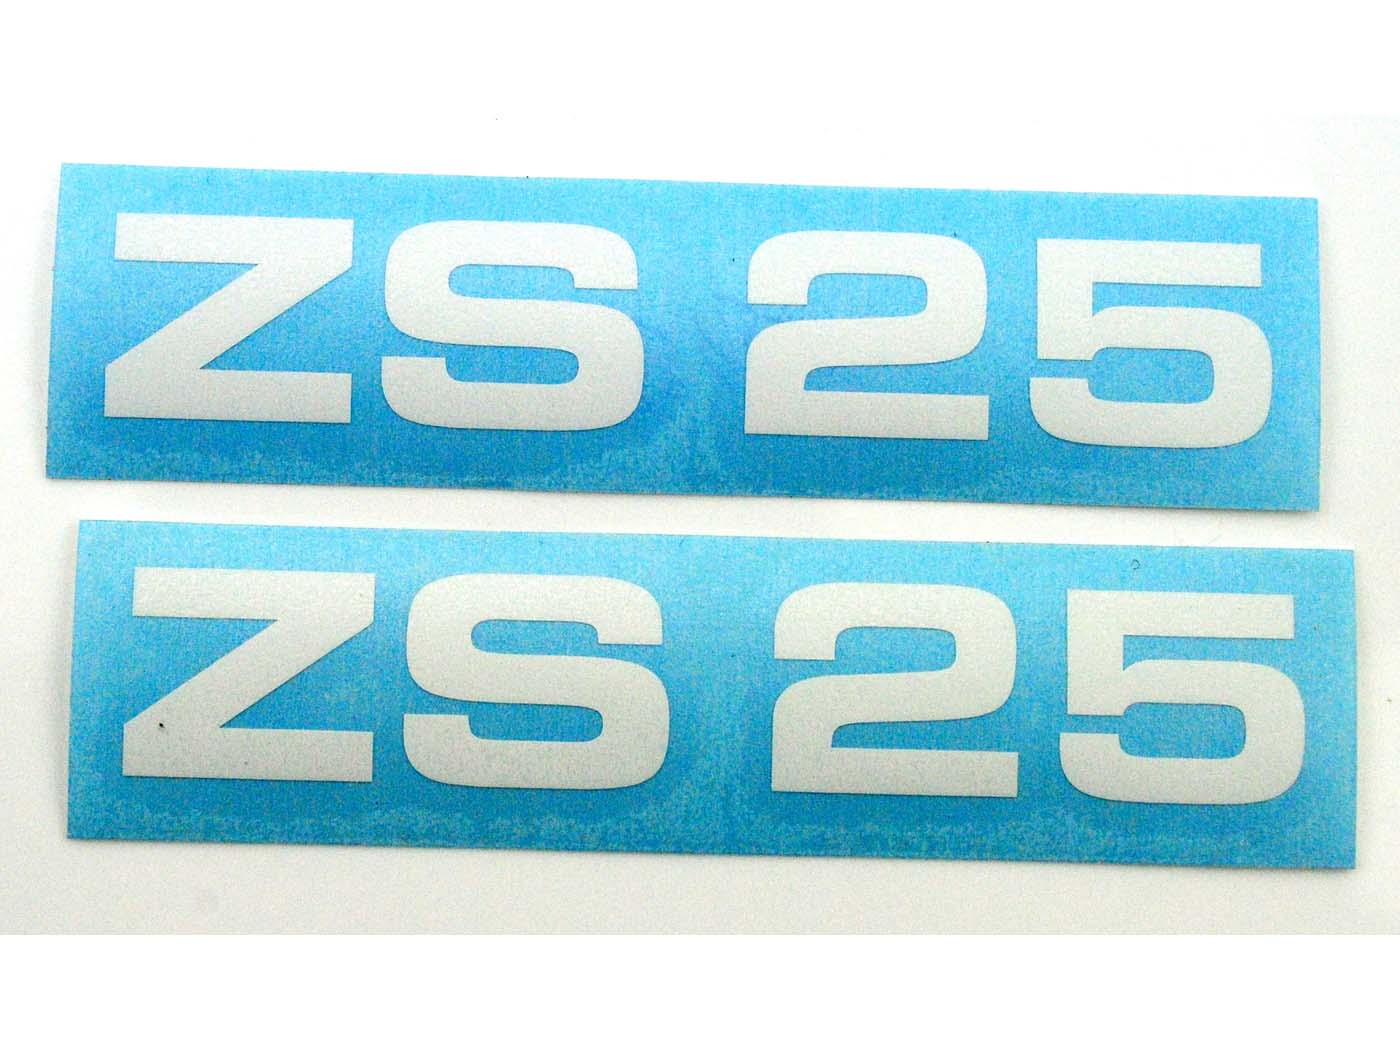 Sticker Set MOGA 2 Parts Wide Approx. 95mm High 17mm For Zündapp ZS 25